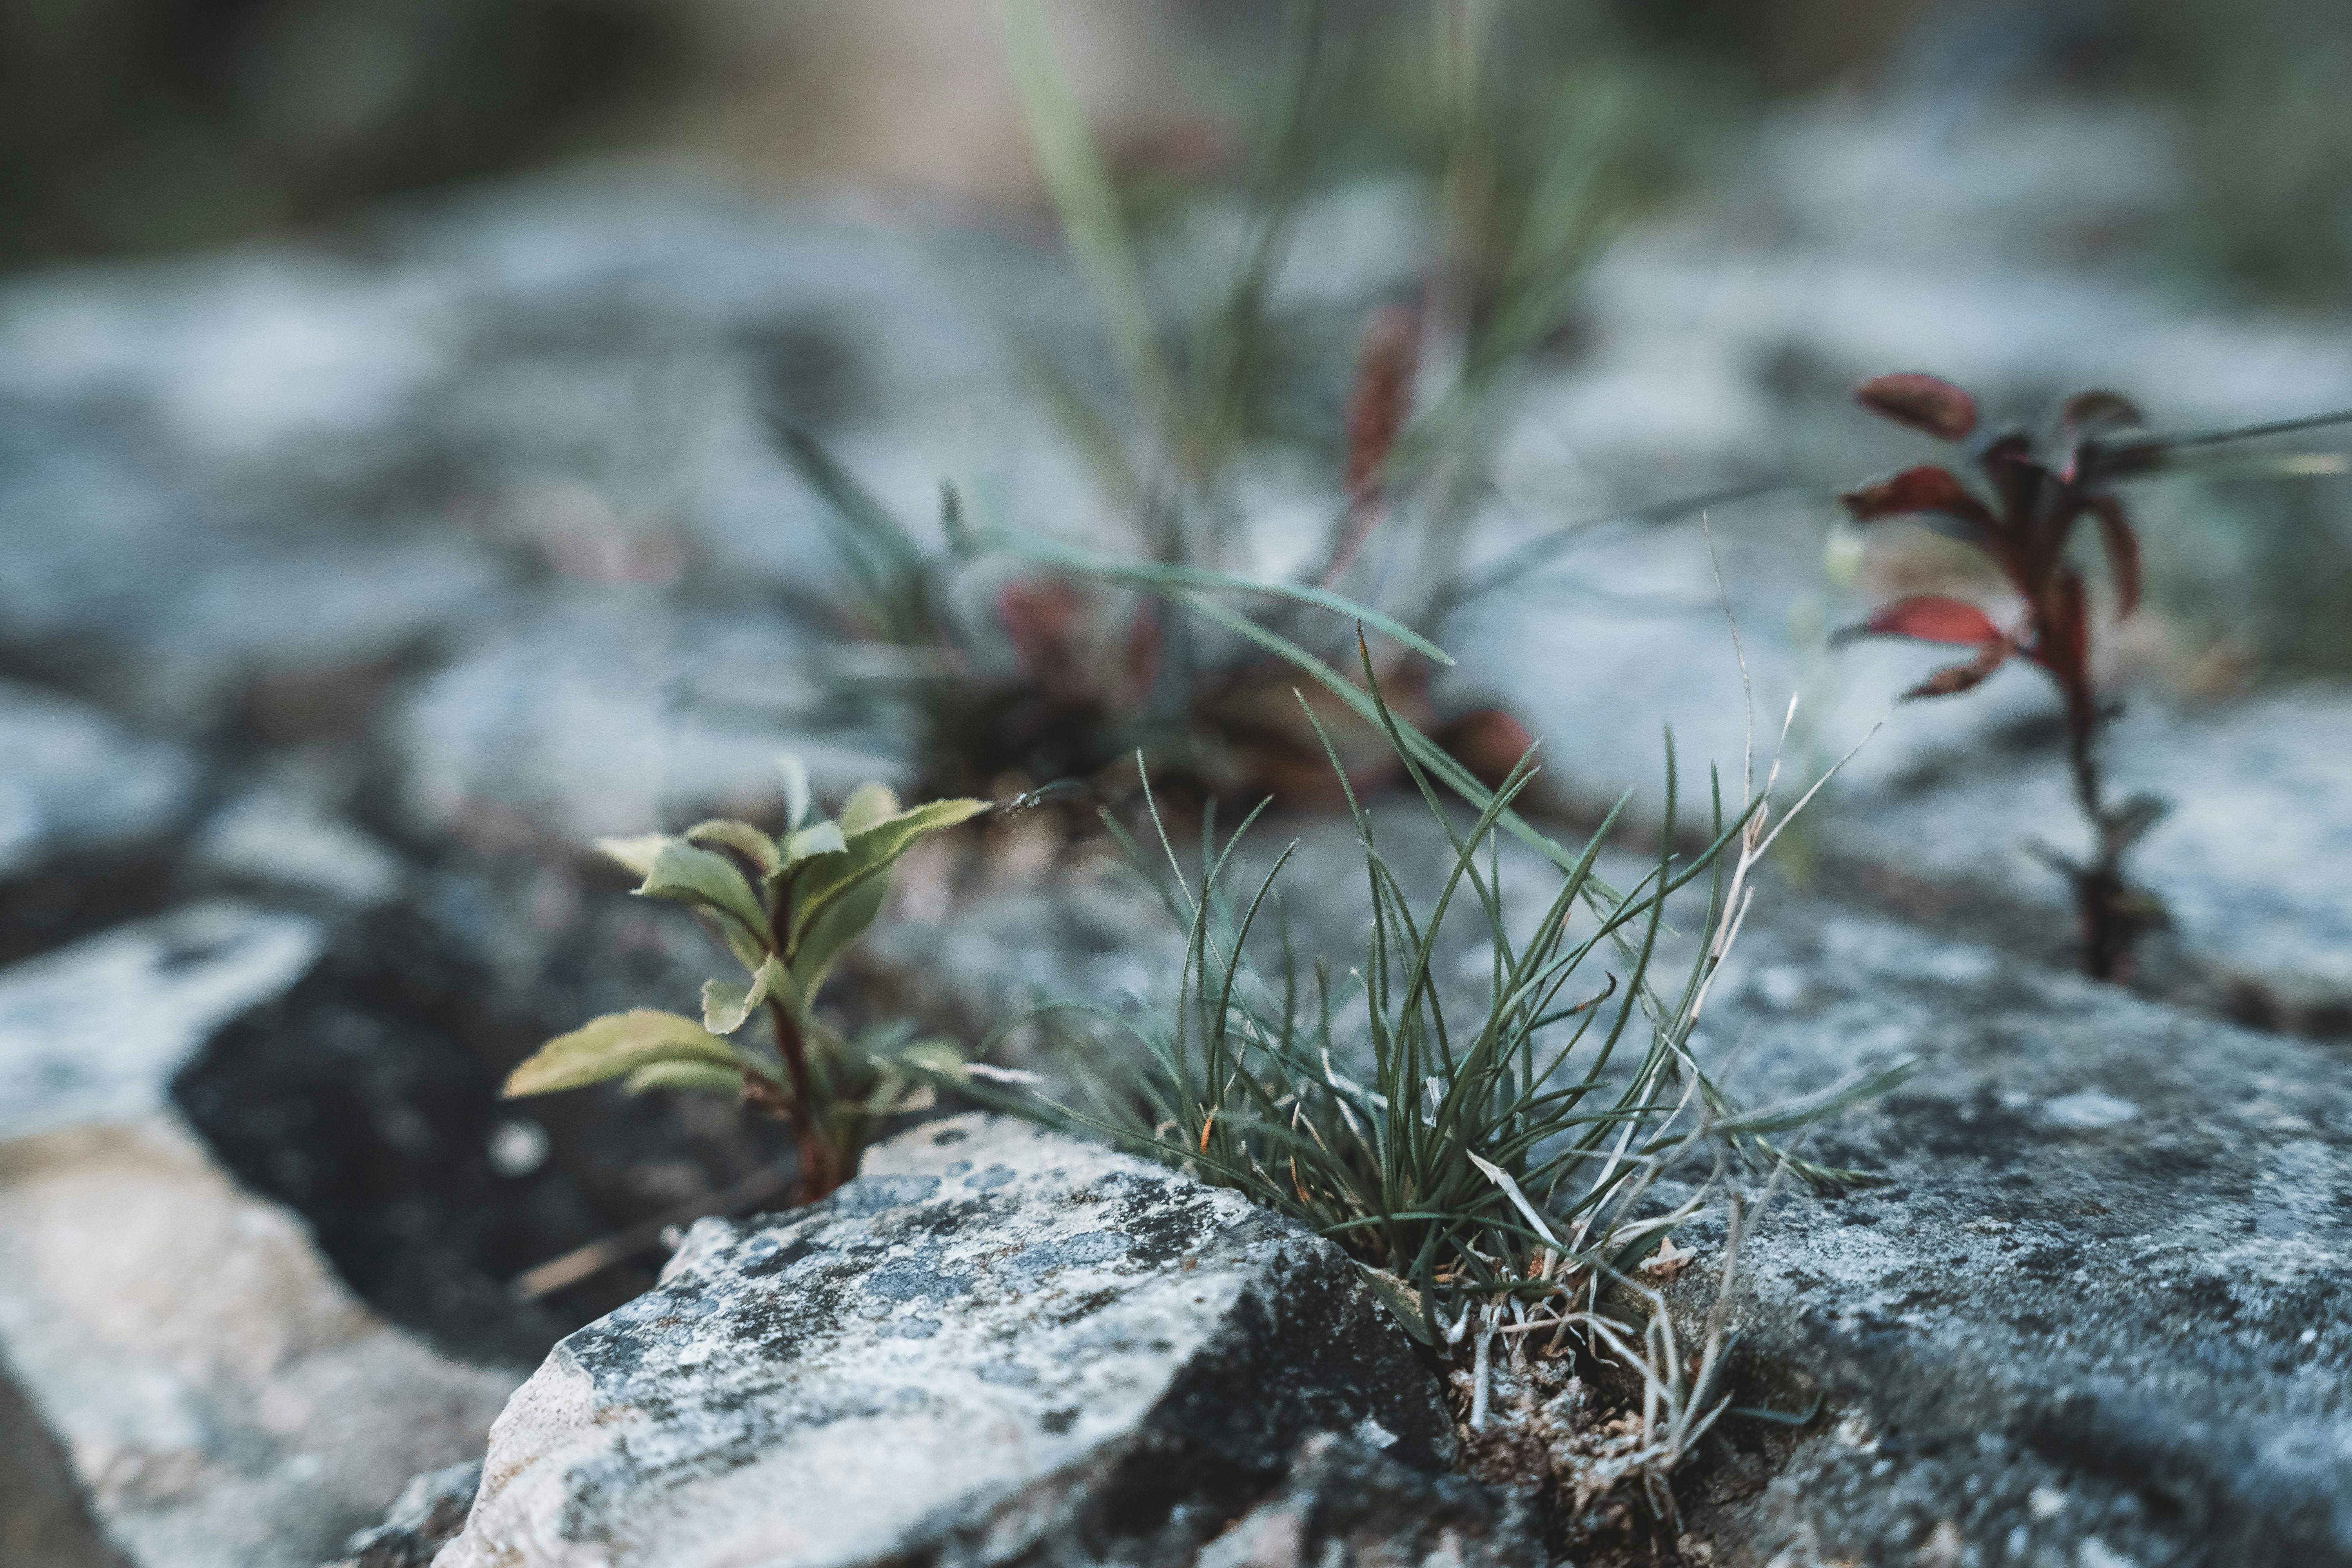 resilient plants growing between rocks